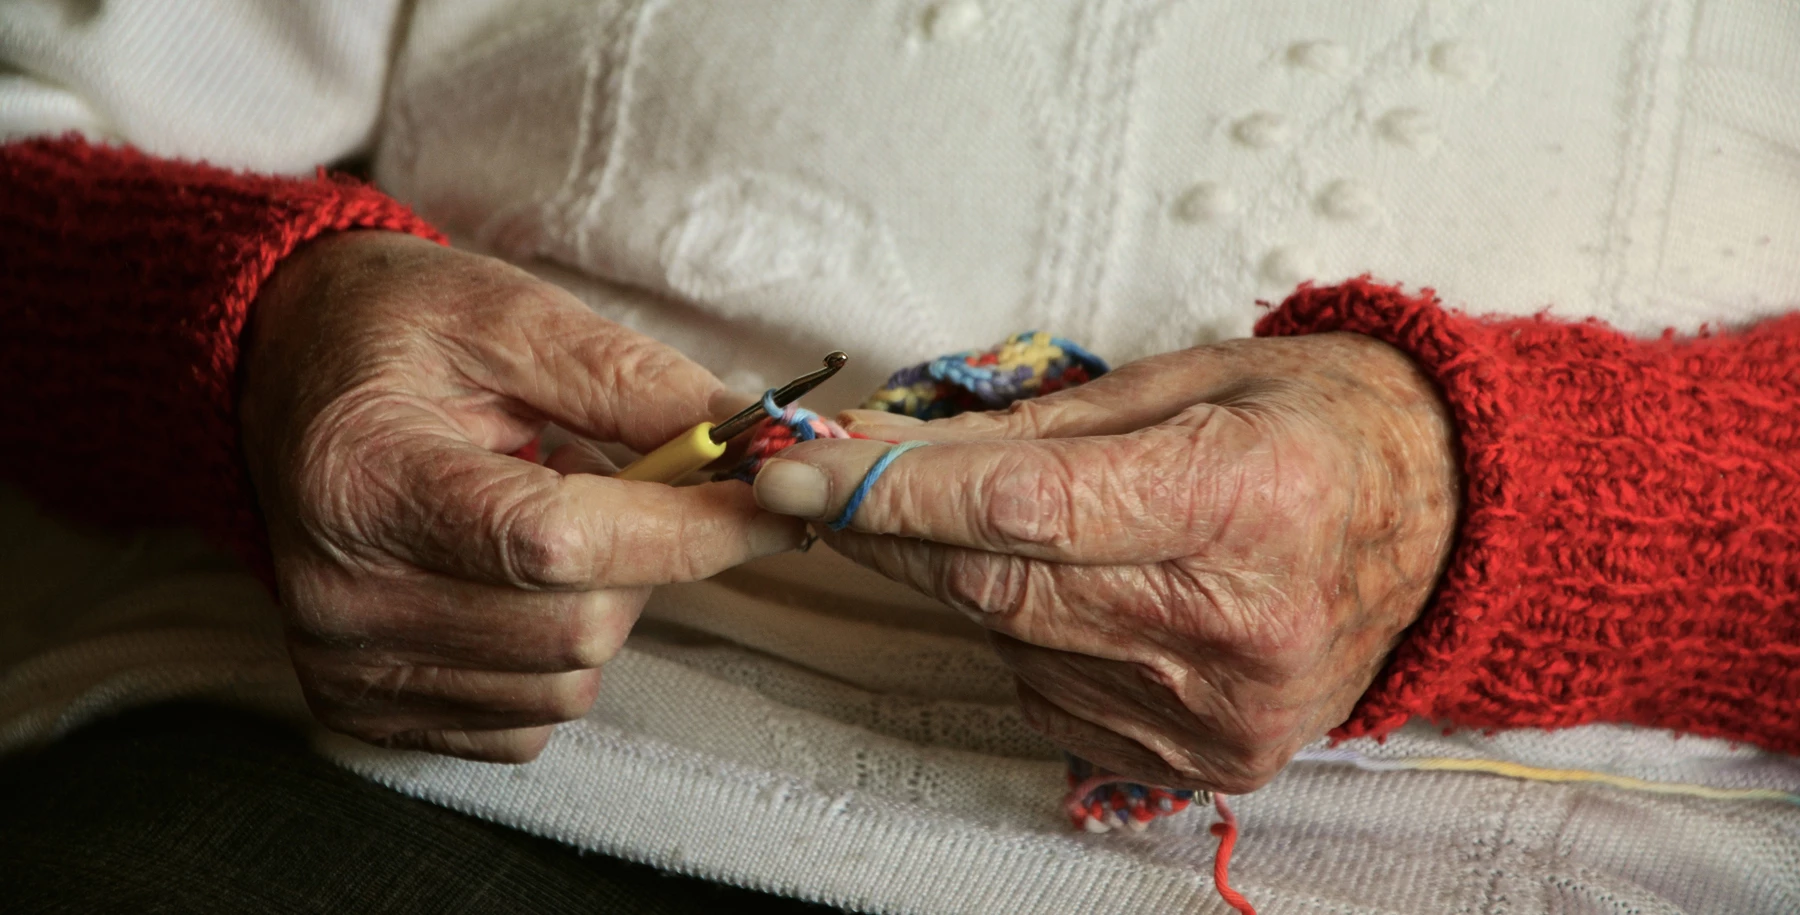 An elderly person knitting